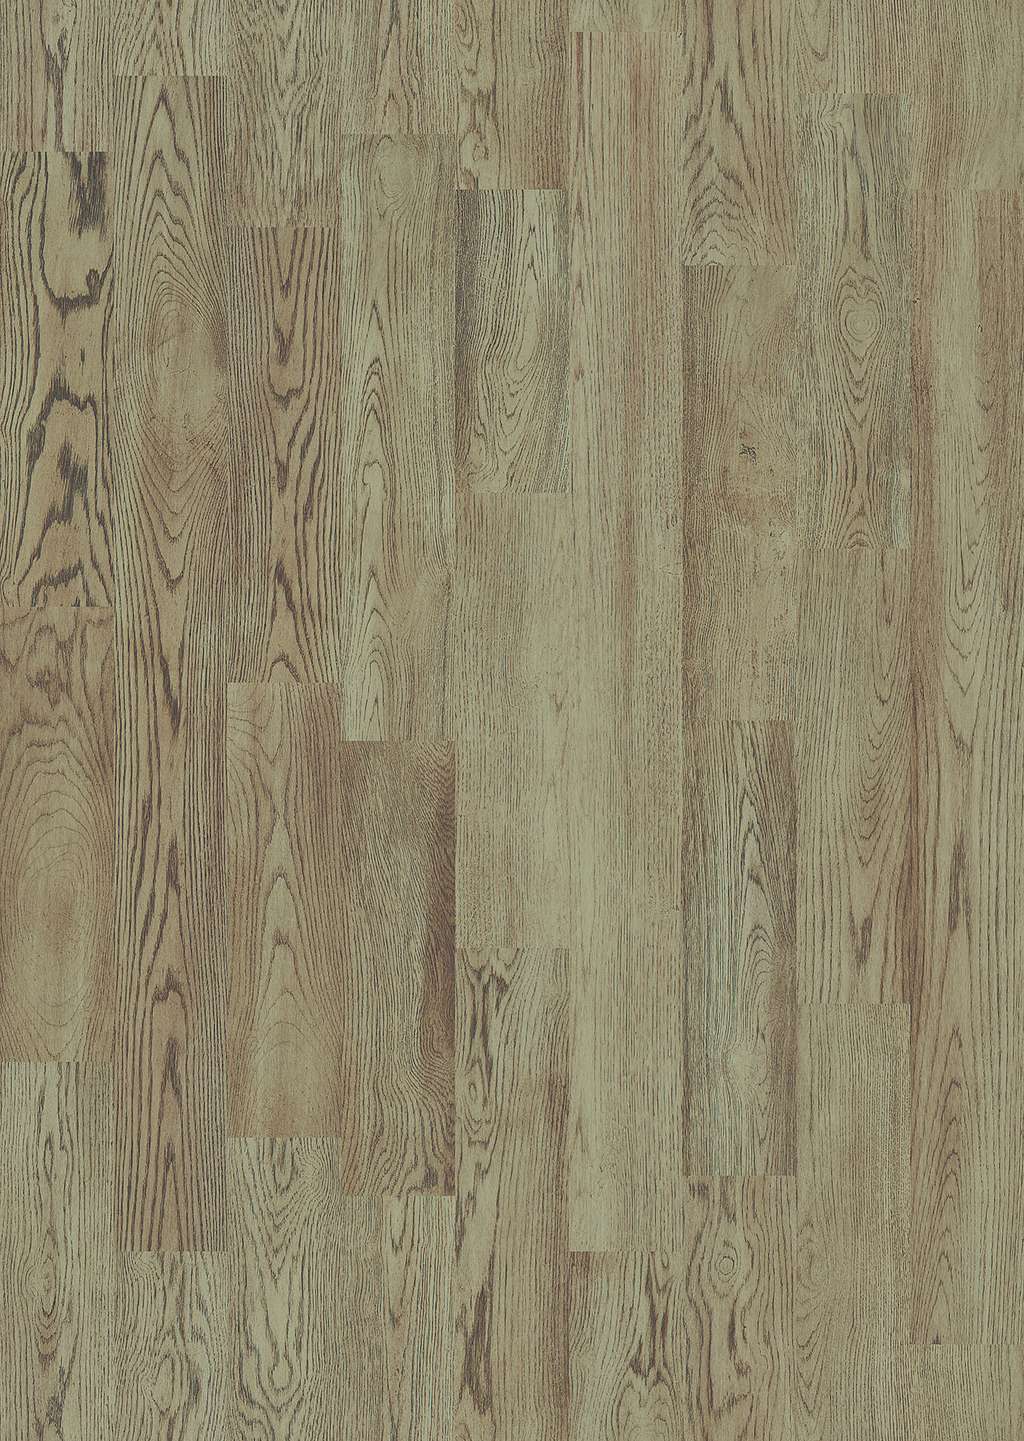 Impeccable Hardwood - Bright Oak Swatch Image